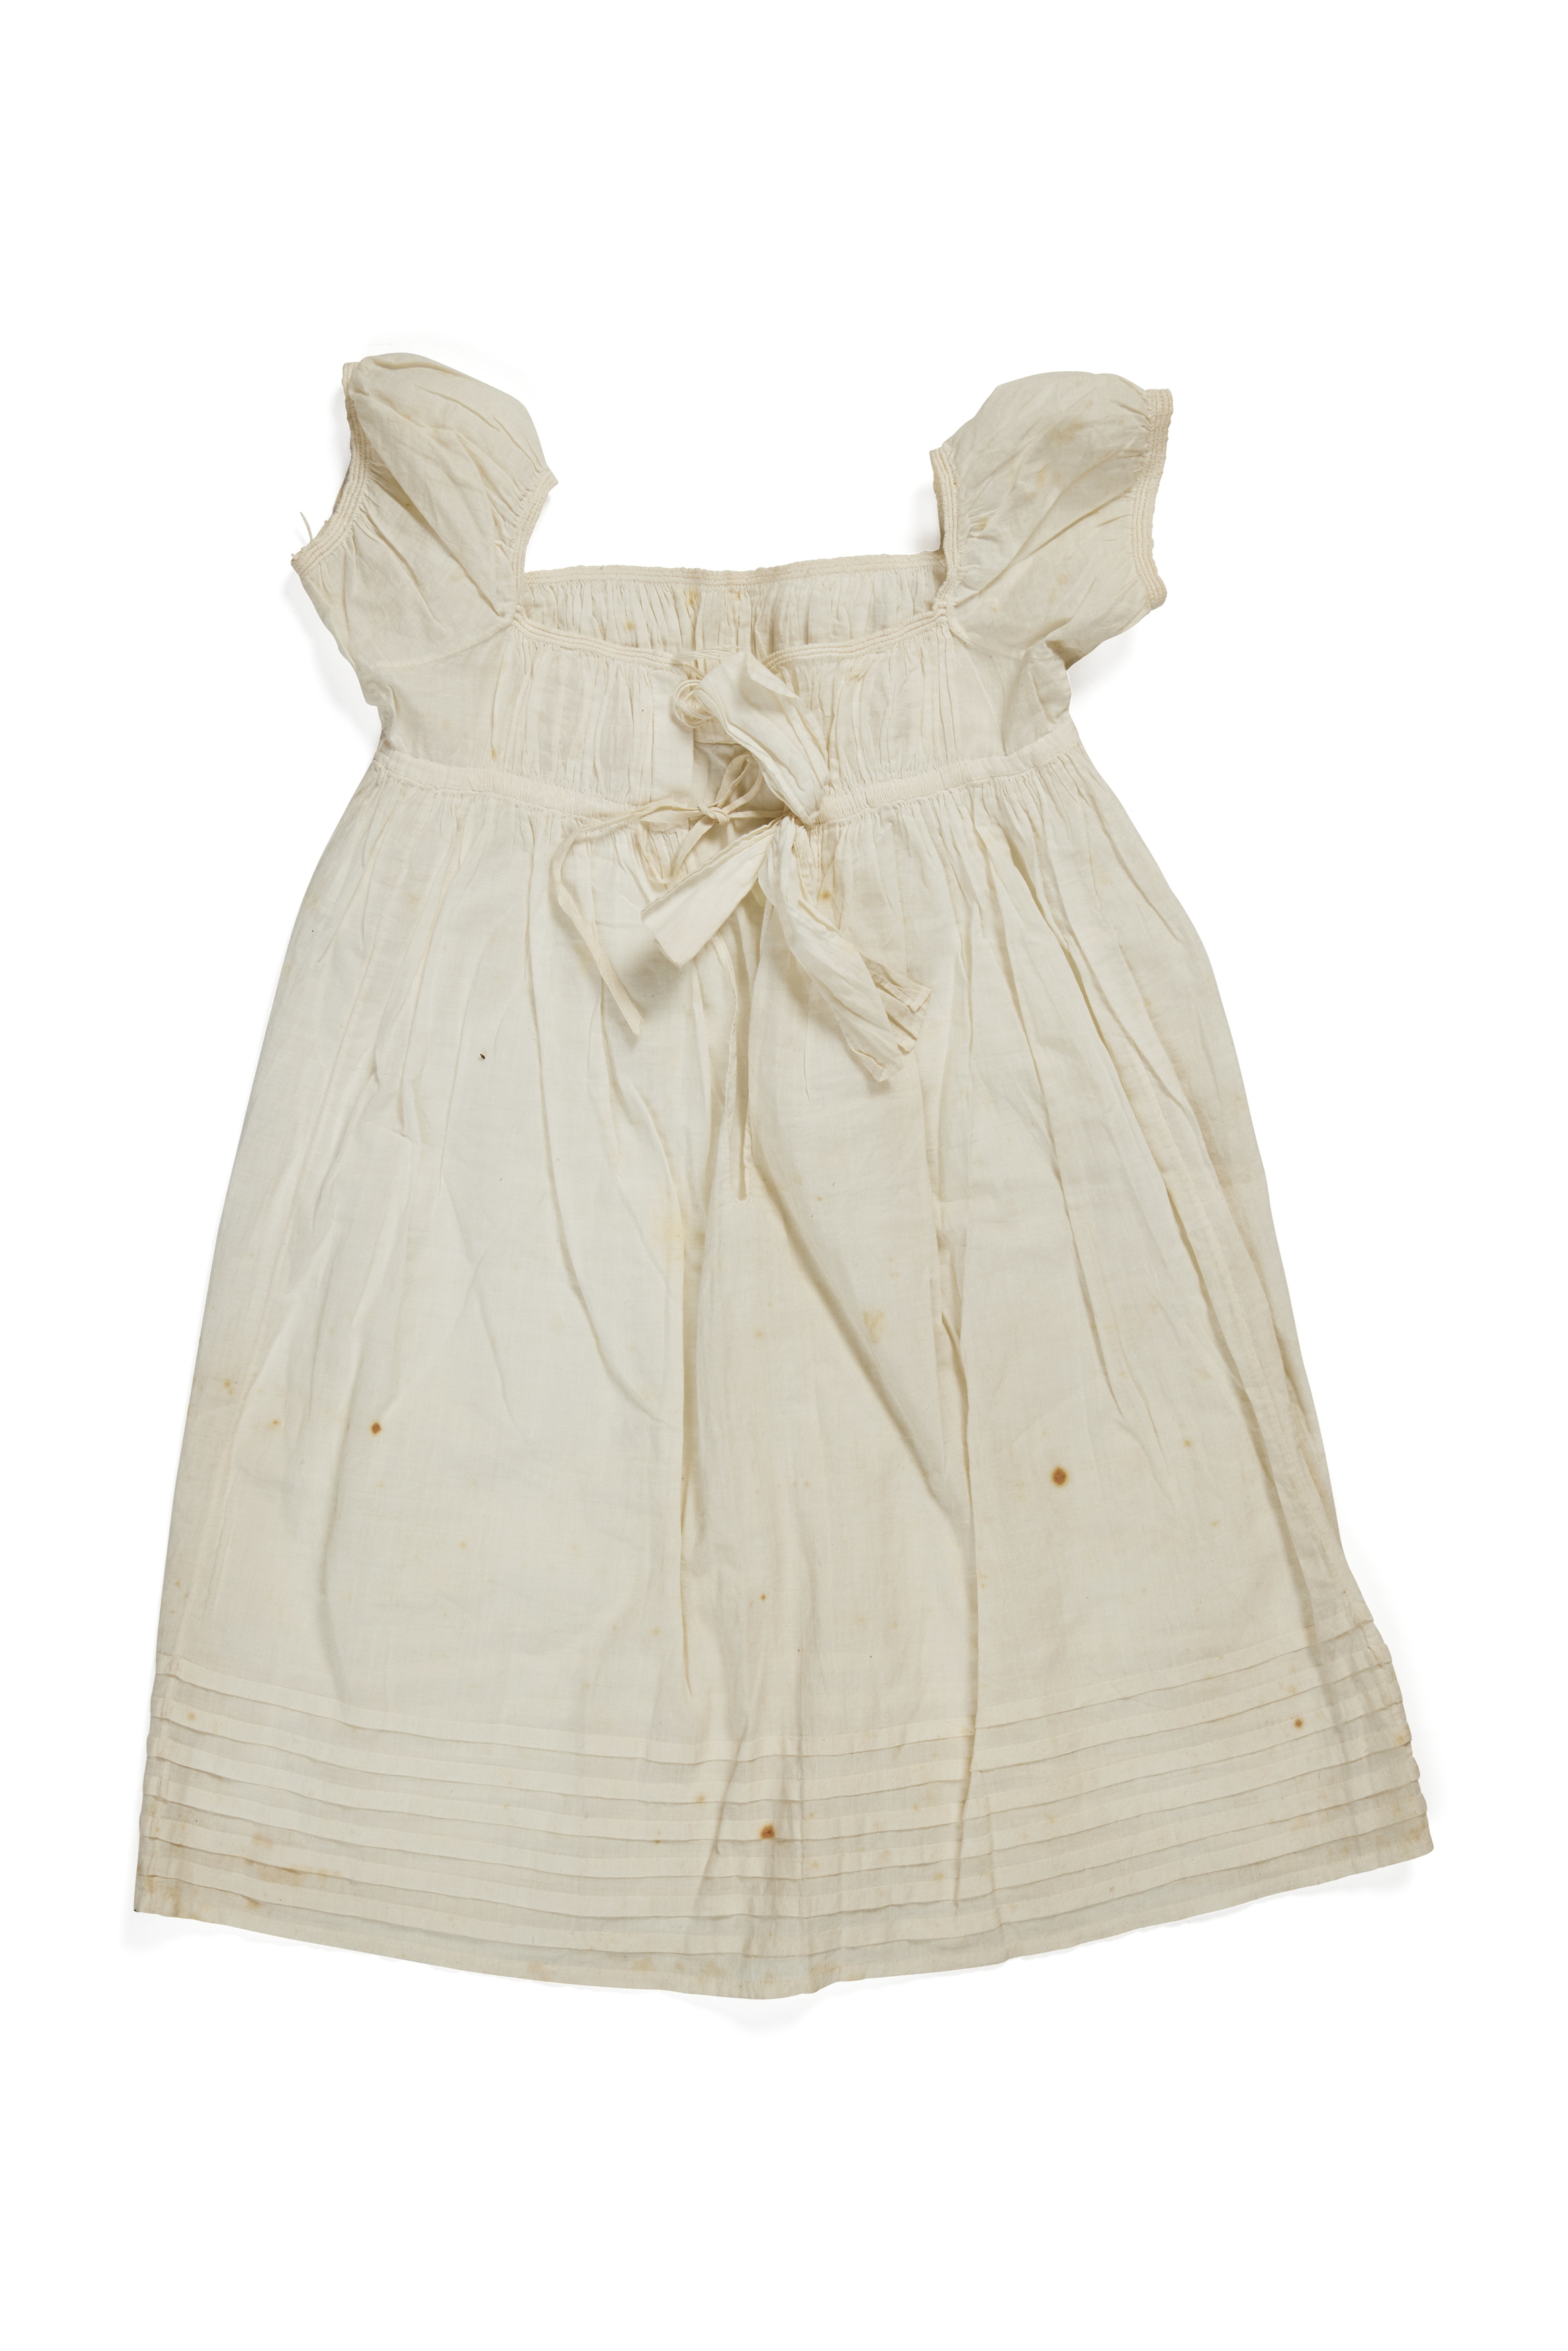 Baby dress worn by John Nuttall